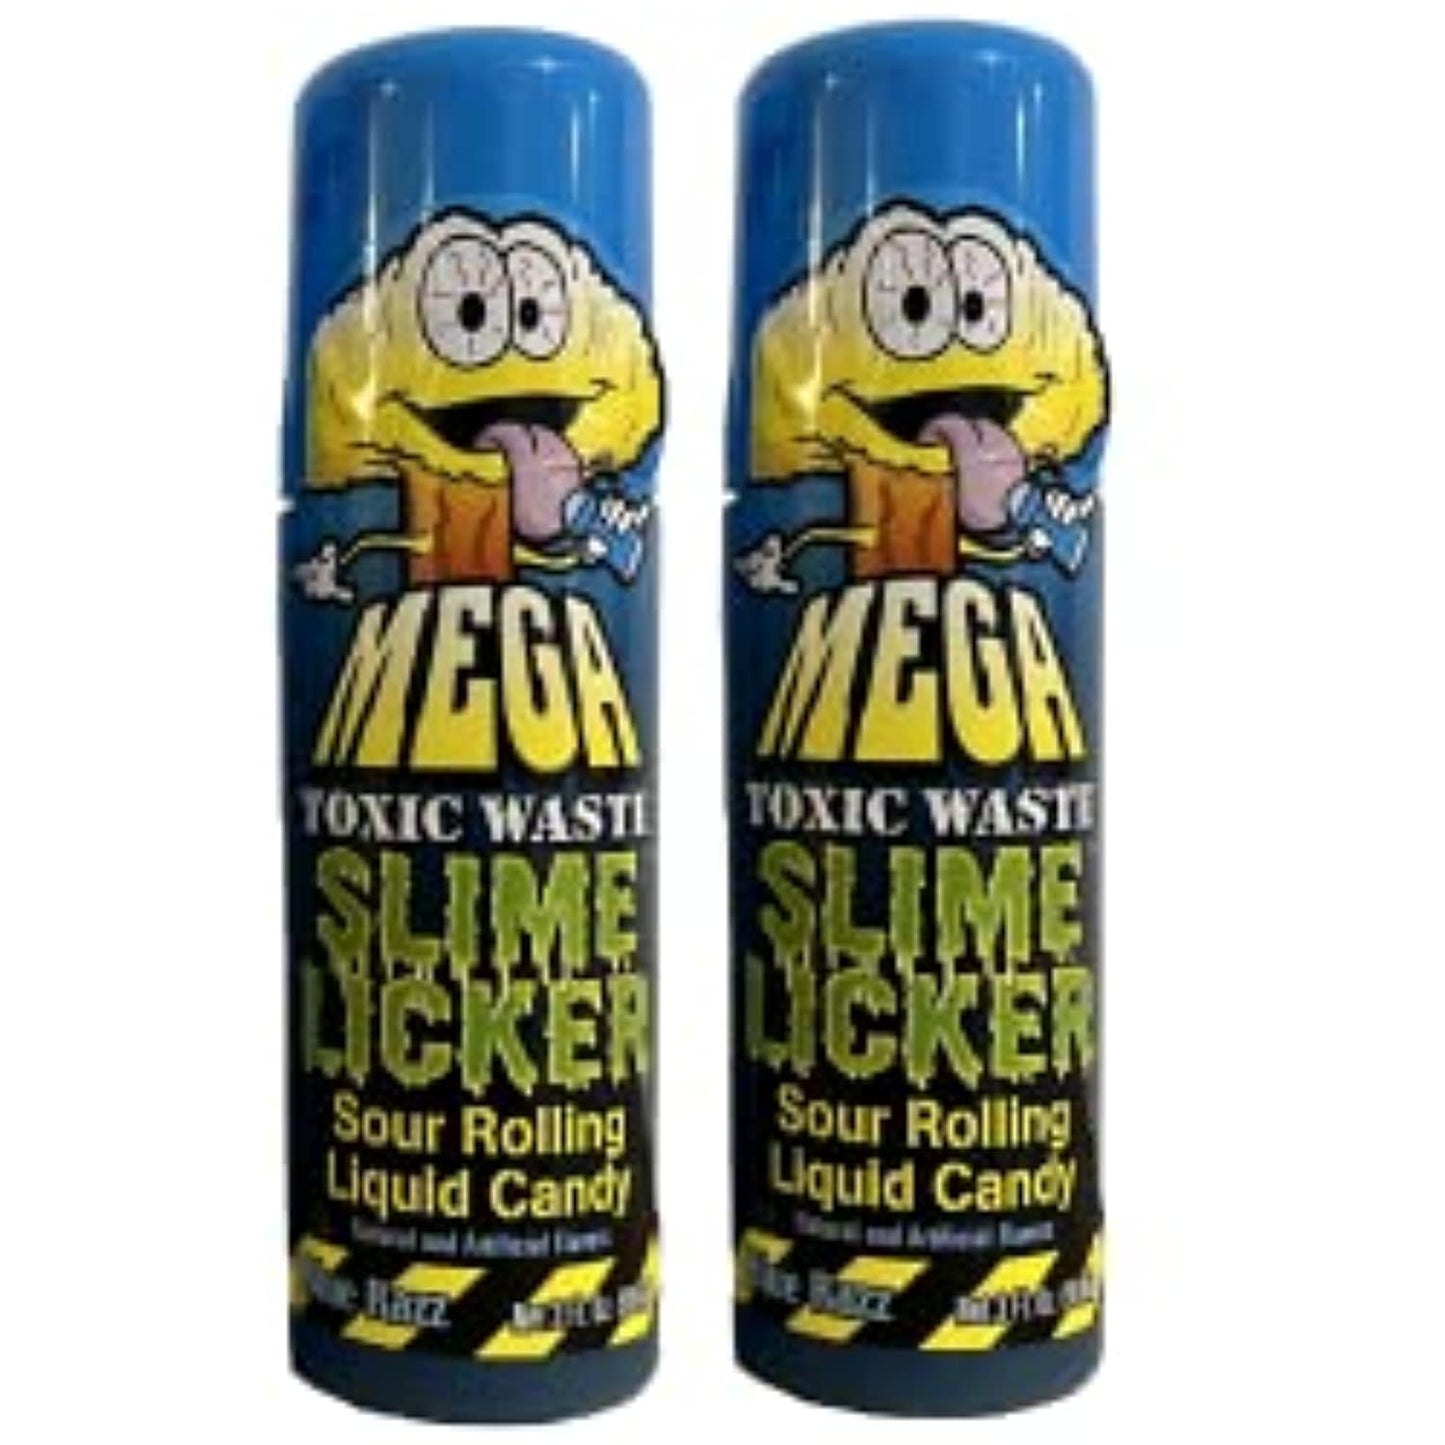 Slime Licker MEGA Size - 2-Pack of Sour Rolling Liquid Candy - TWO Blue Razz Flavors - 3 Ounces Each Bottle - Toxic Waste - TikTok Challenge Trend